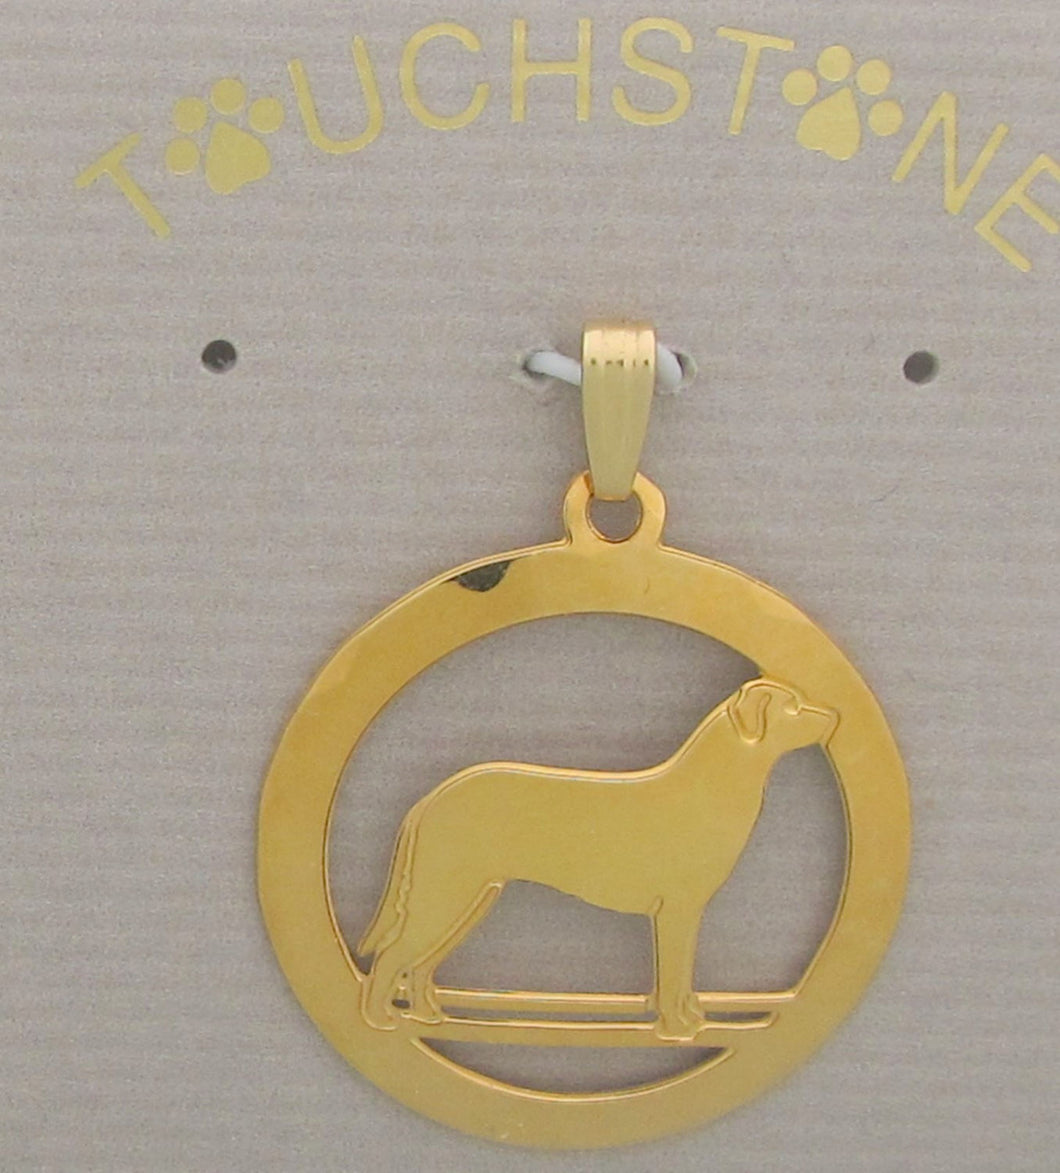 Anatolian Shepherd Pendant by Touchstone Dog Designs //  Anatolian Shepherd Jewelry  // Dog Breed Jewelry